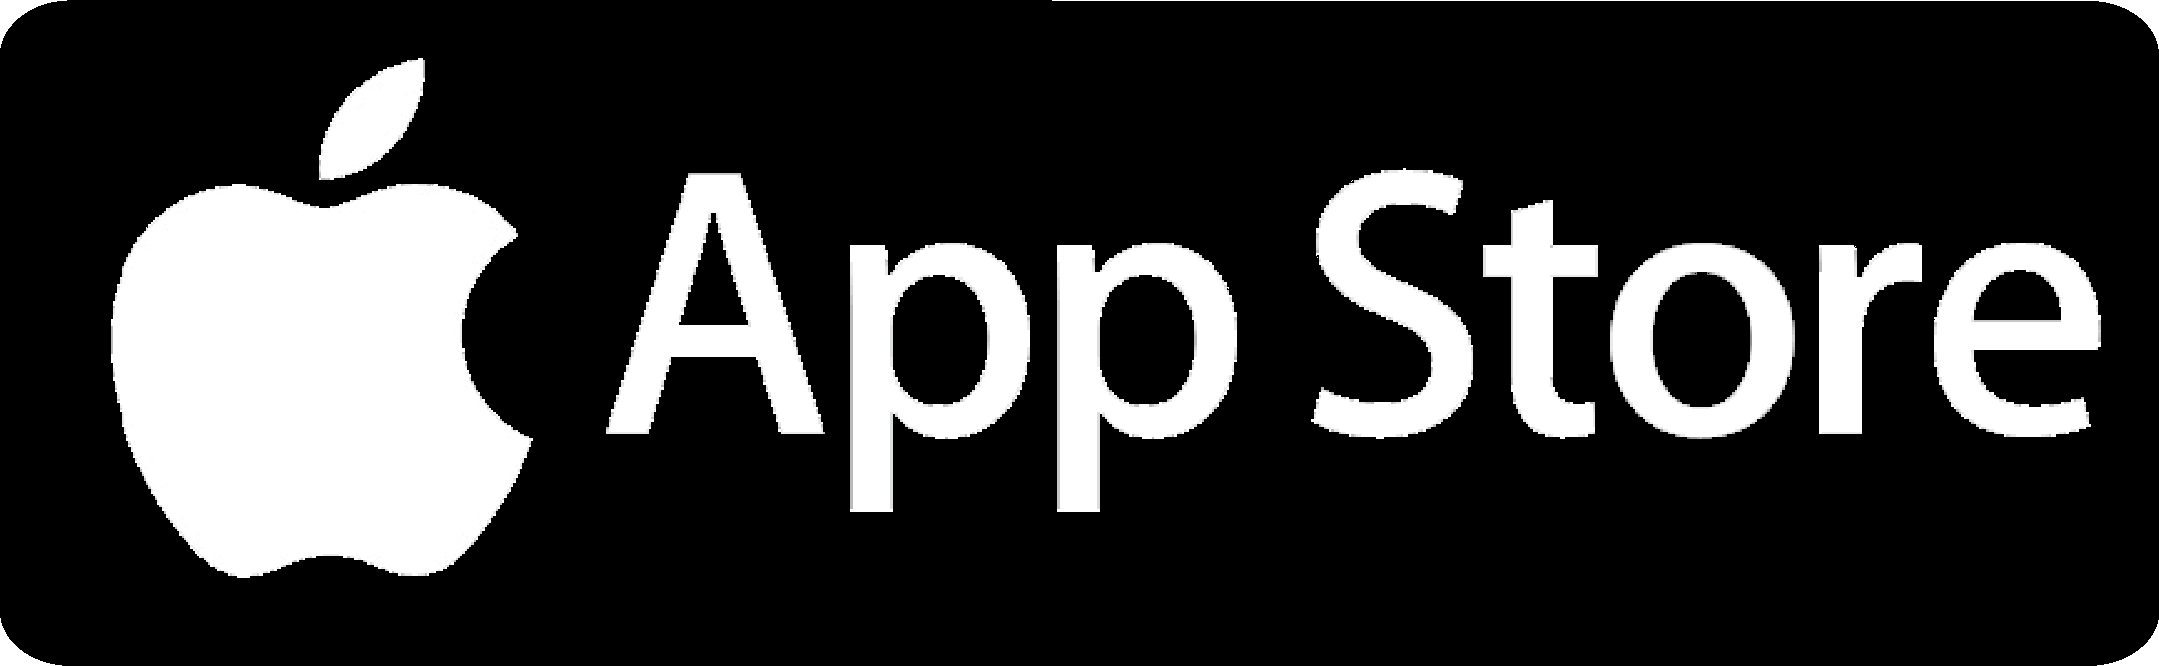 App Store Logo Png 2159 X 666